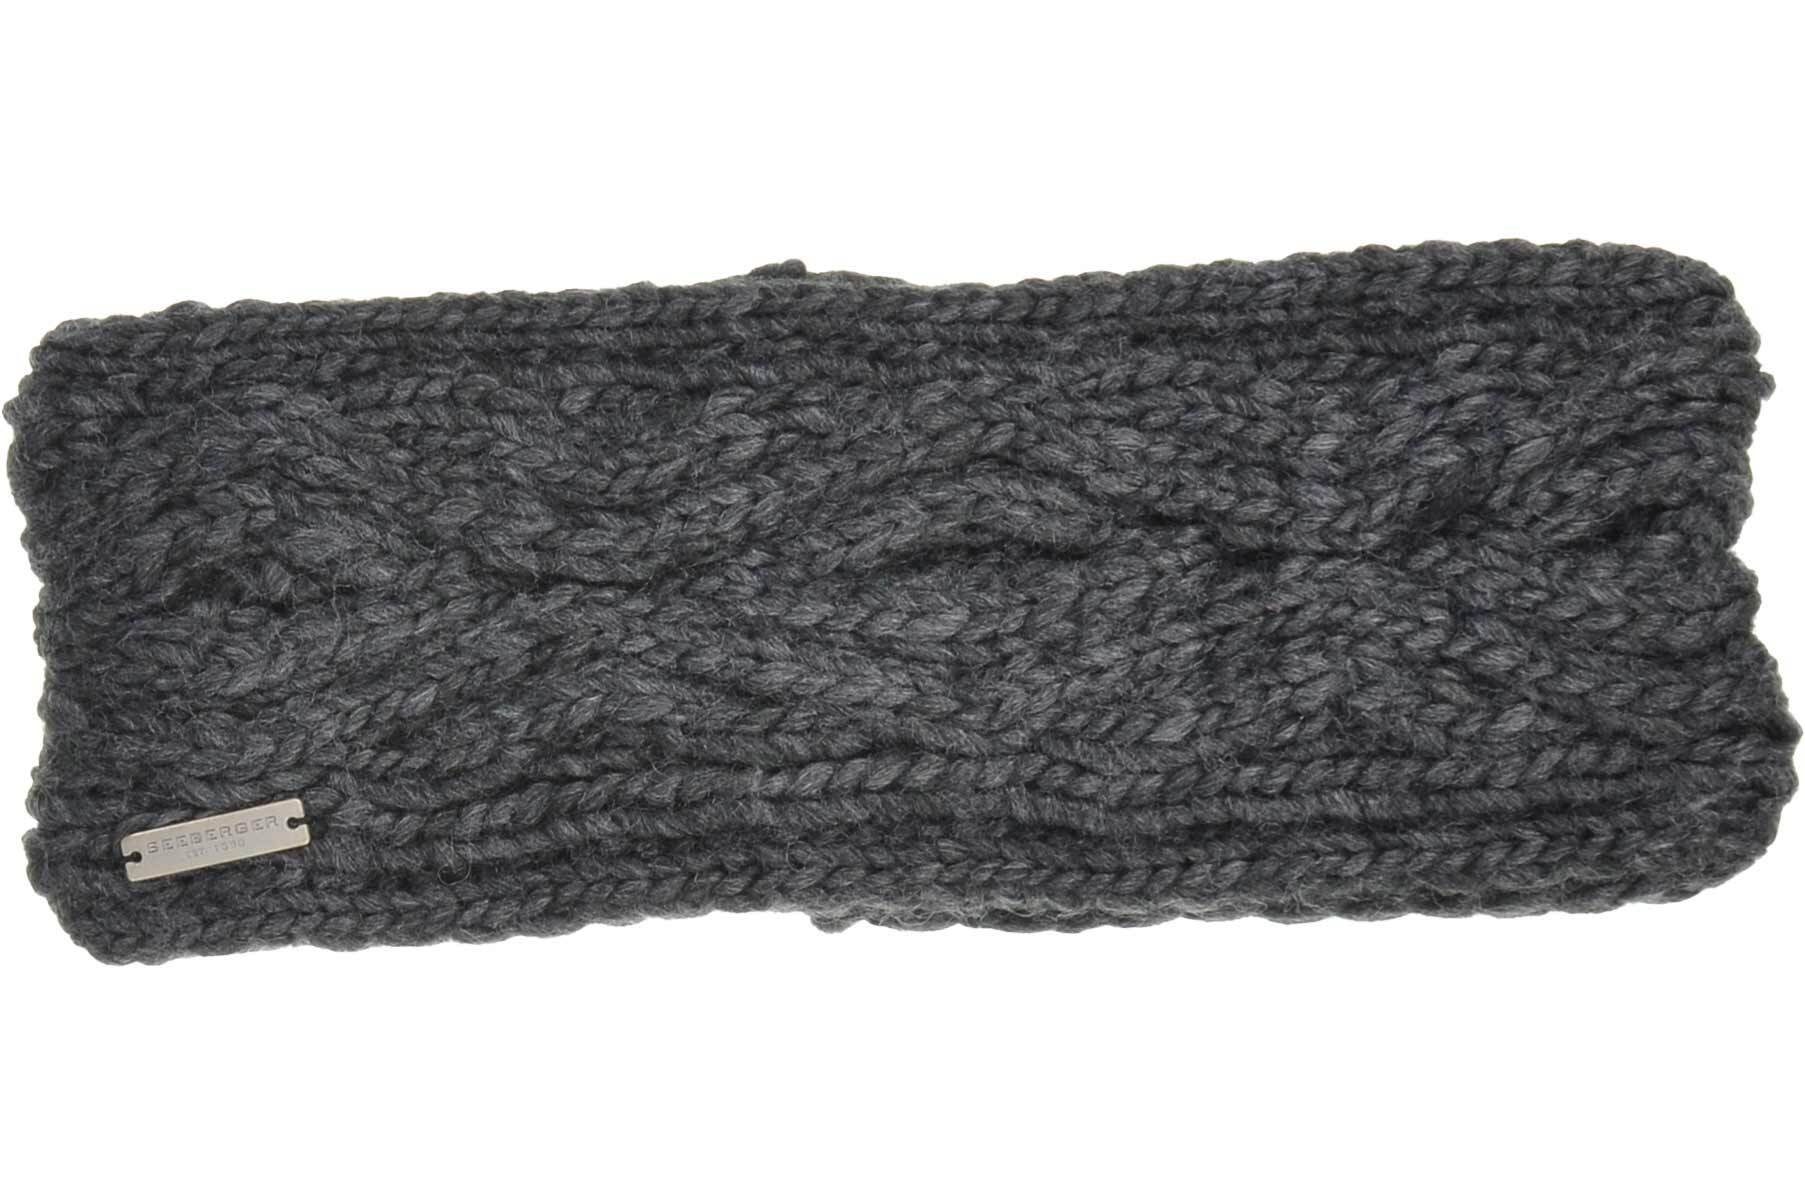 Seeberger Stirnband Strick Stirnband mit Zopfmuster 19177-0 anthrazit